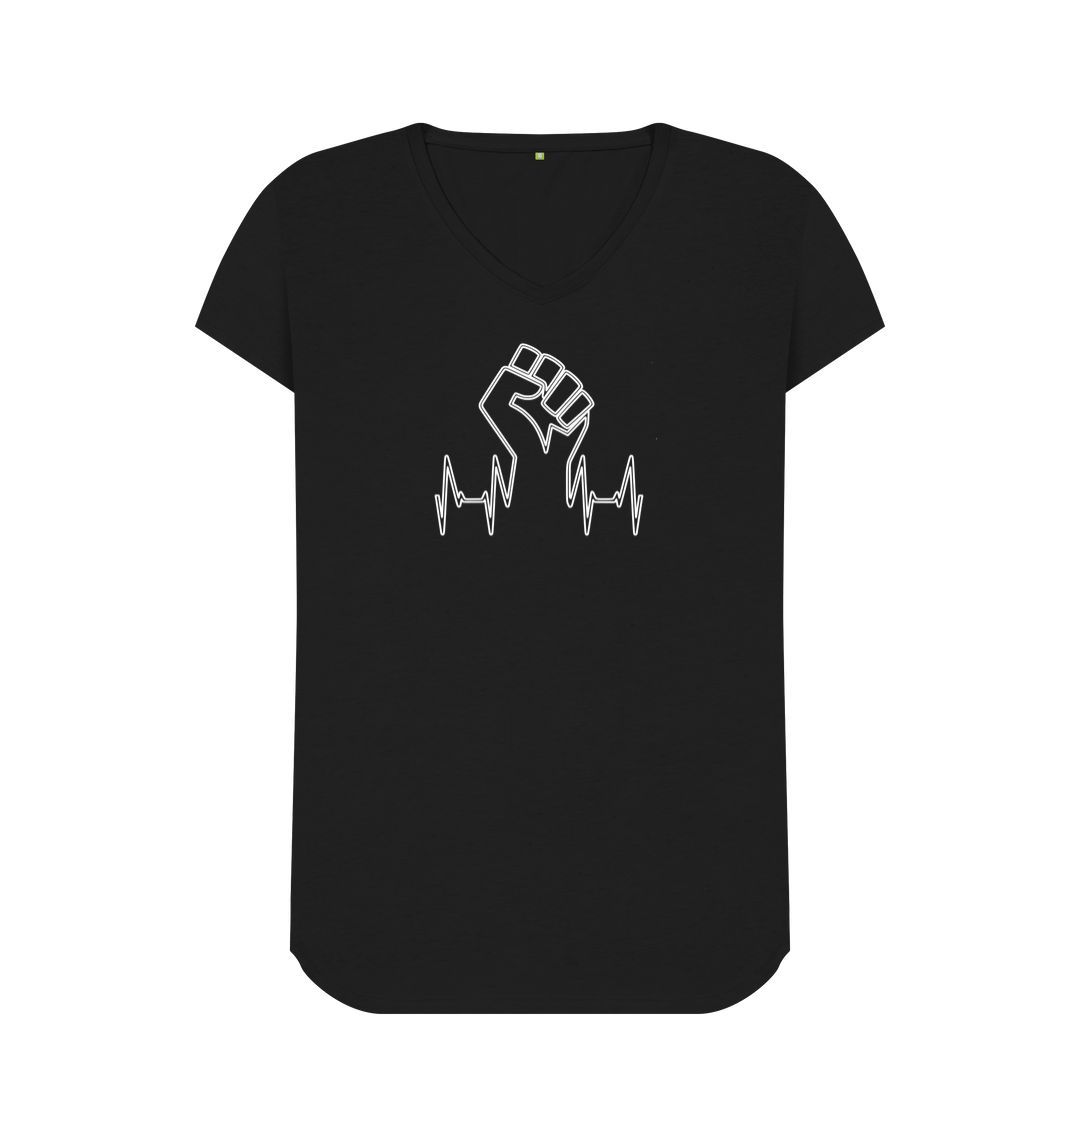 Black Fist womens fit V neck T-shirt